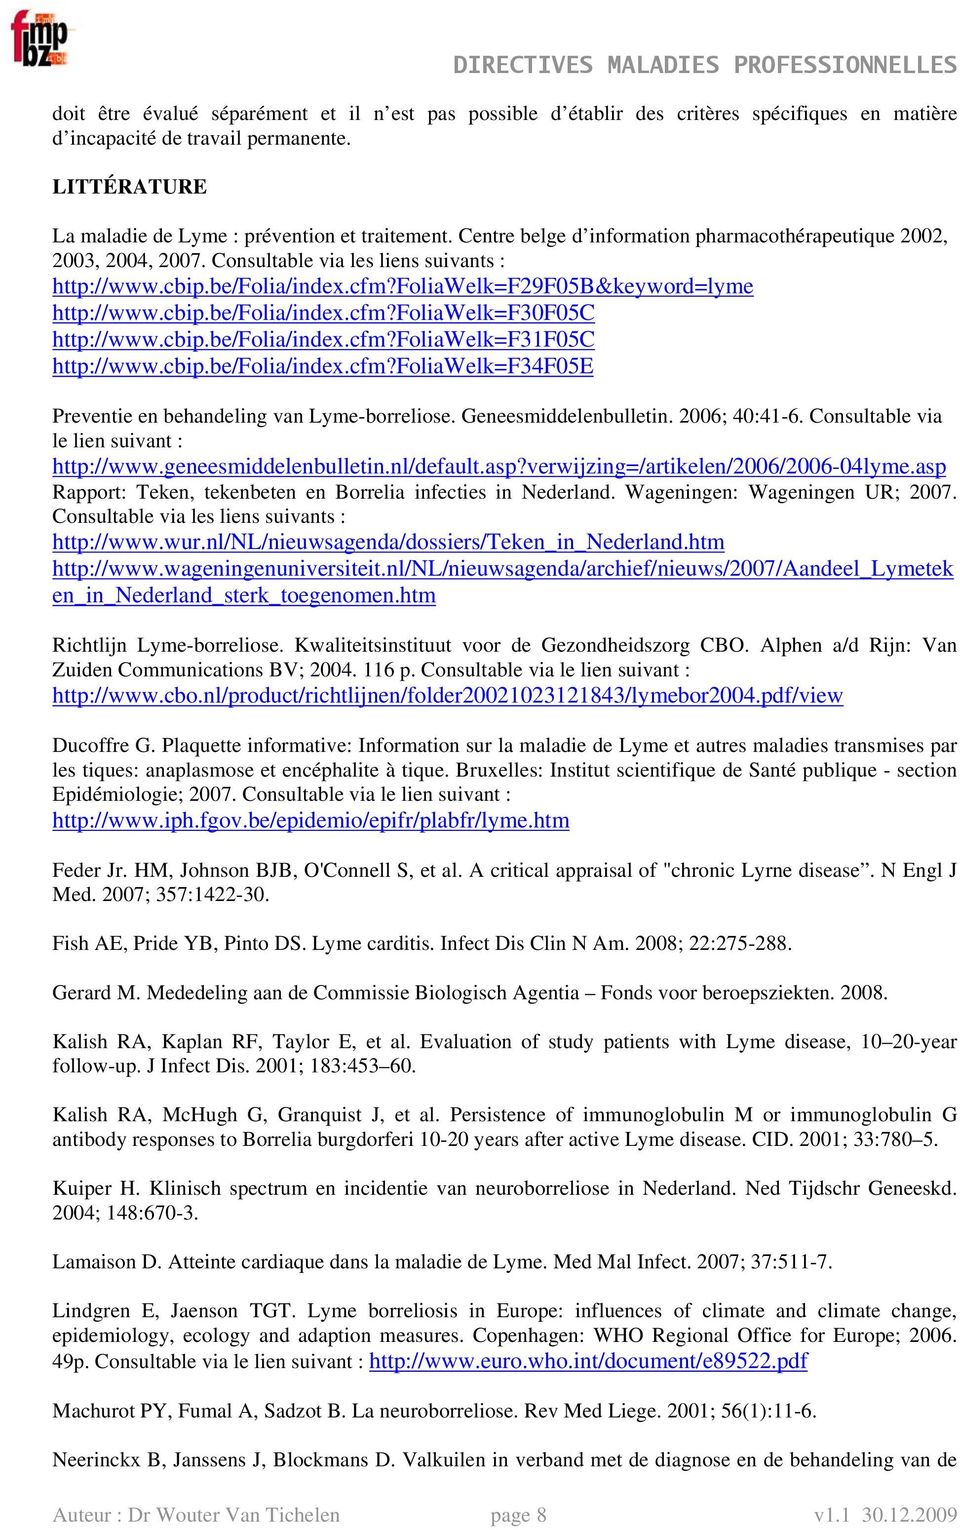 cbip.be/folia/index.cfm?foliawelk=f31f05c http://www.cbip.be/folia/index.cfm?foliawelk=f34f05e Preventie en behandeling van Lyme-borreliose. Geneesmiddelenbulletin. 2006; 40:41-6.